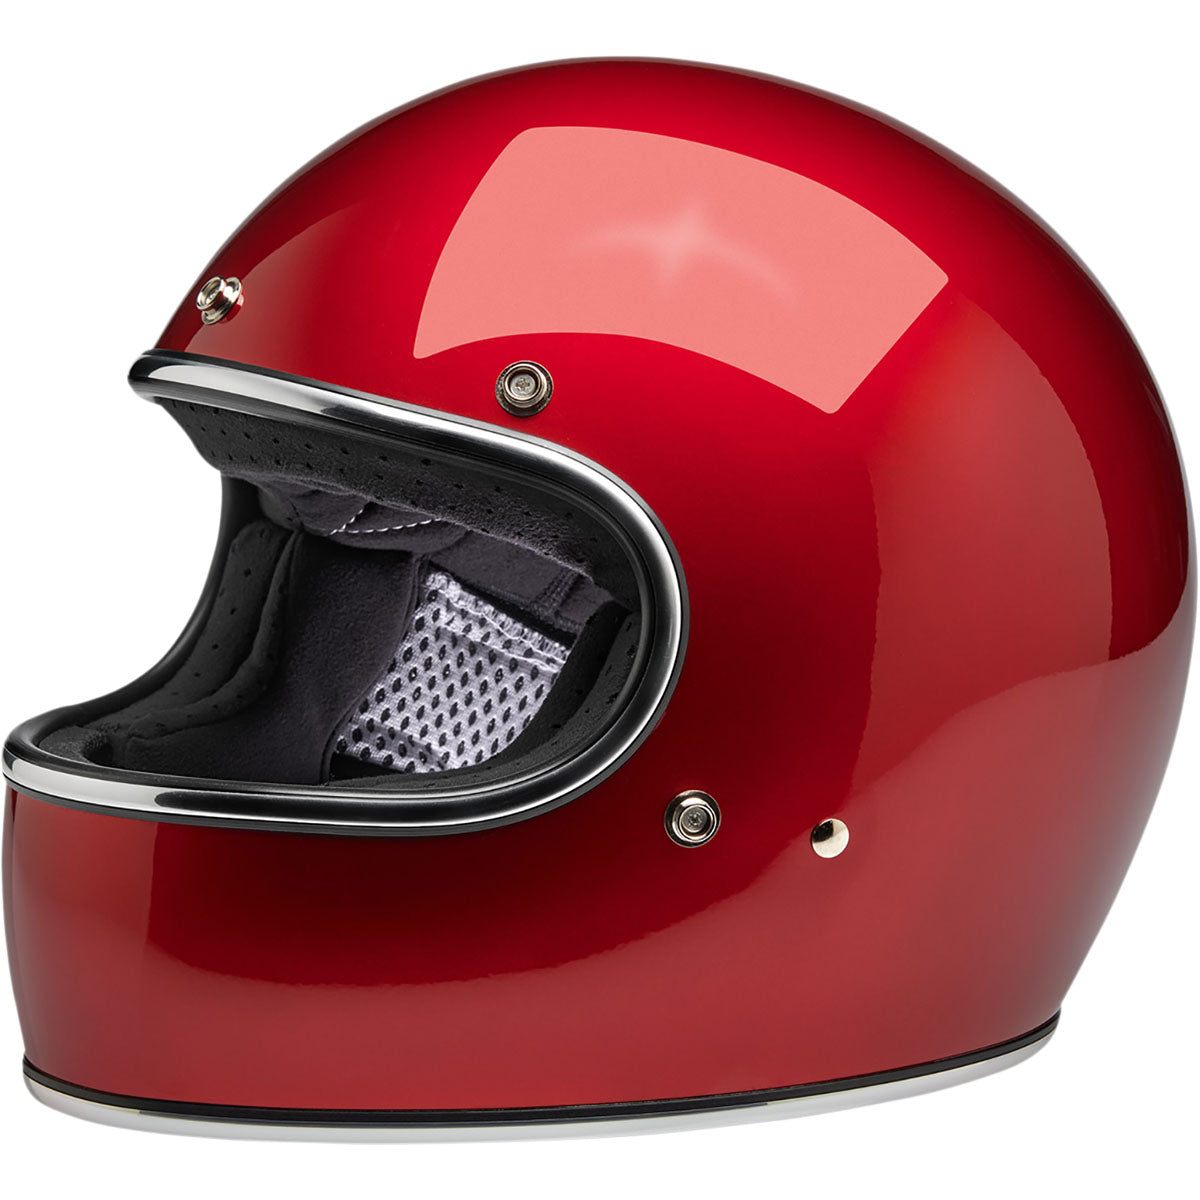 Biltwell Gringo Helmet CLOSEOUT - Metallic Cherry Red